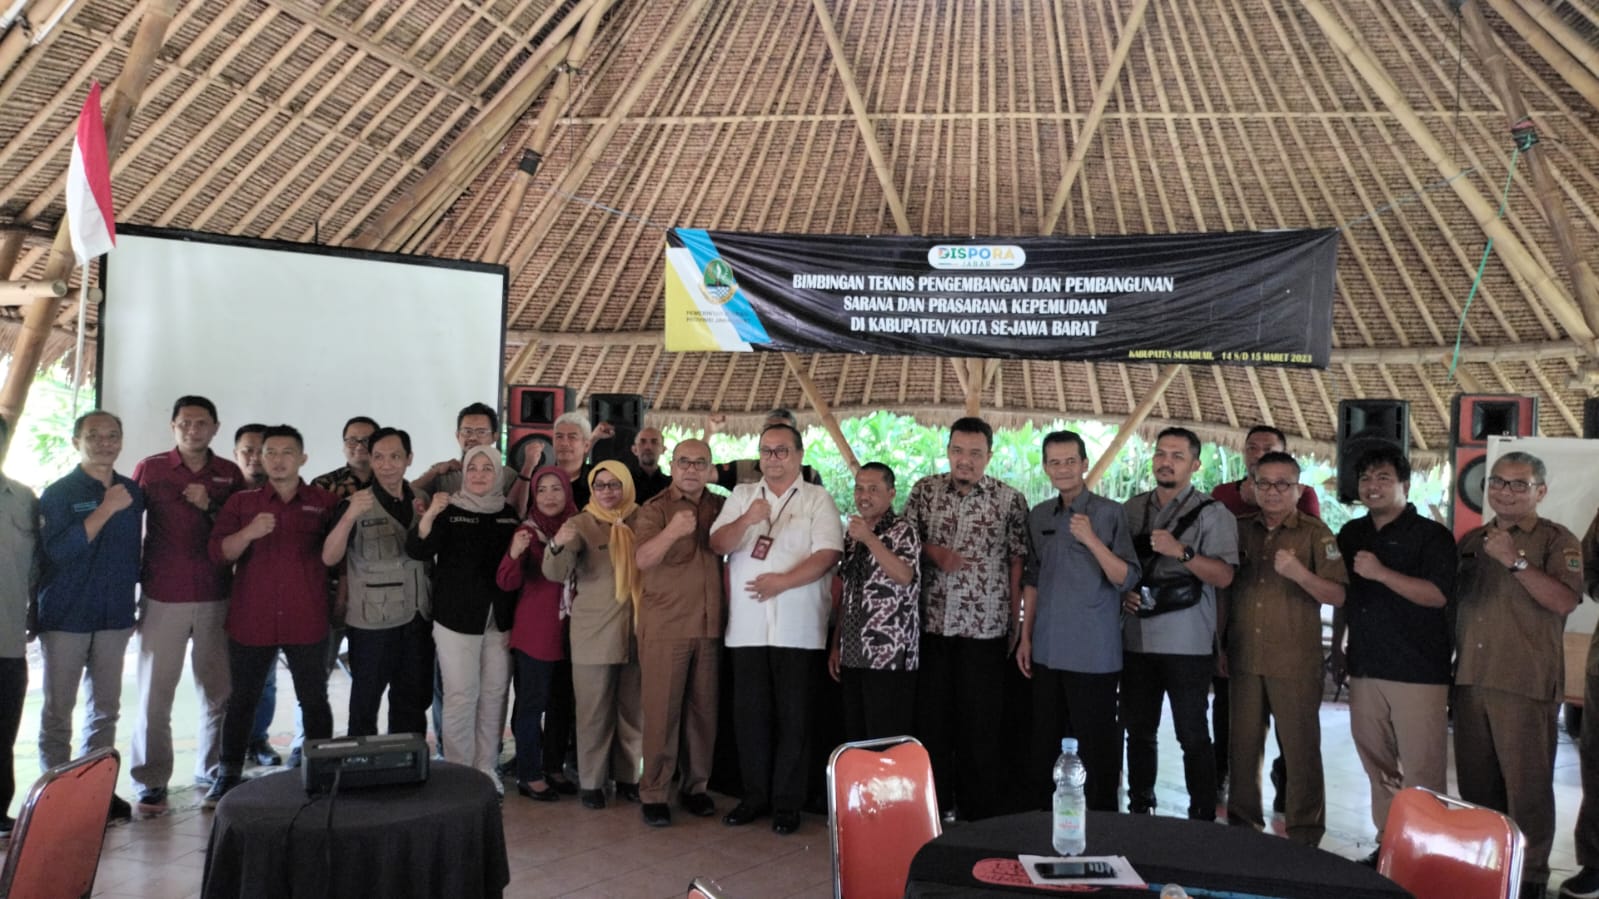 Bimbingan Teknis Pengembangan dan Pembangunan Sarana dan Prasarana Kepemudaan di Kota/Kabupaten Se-Jawa Barat